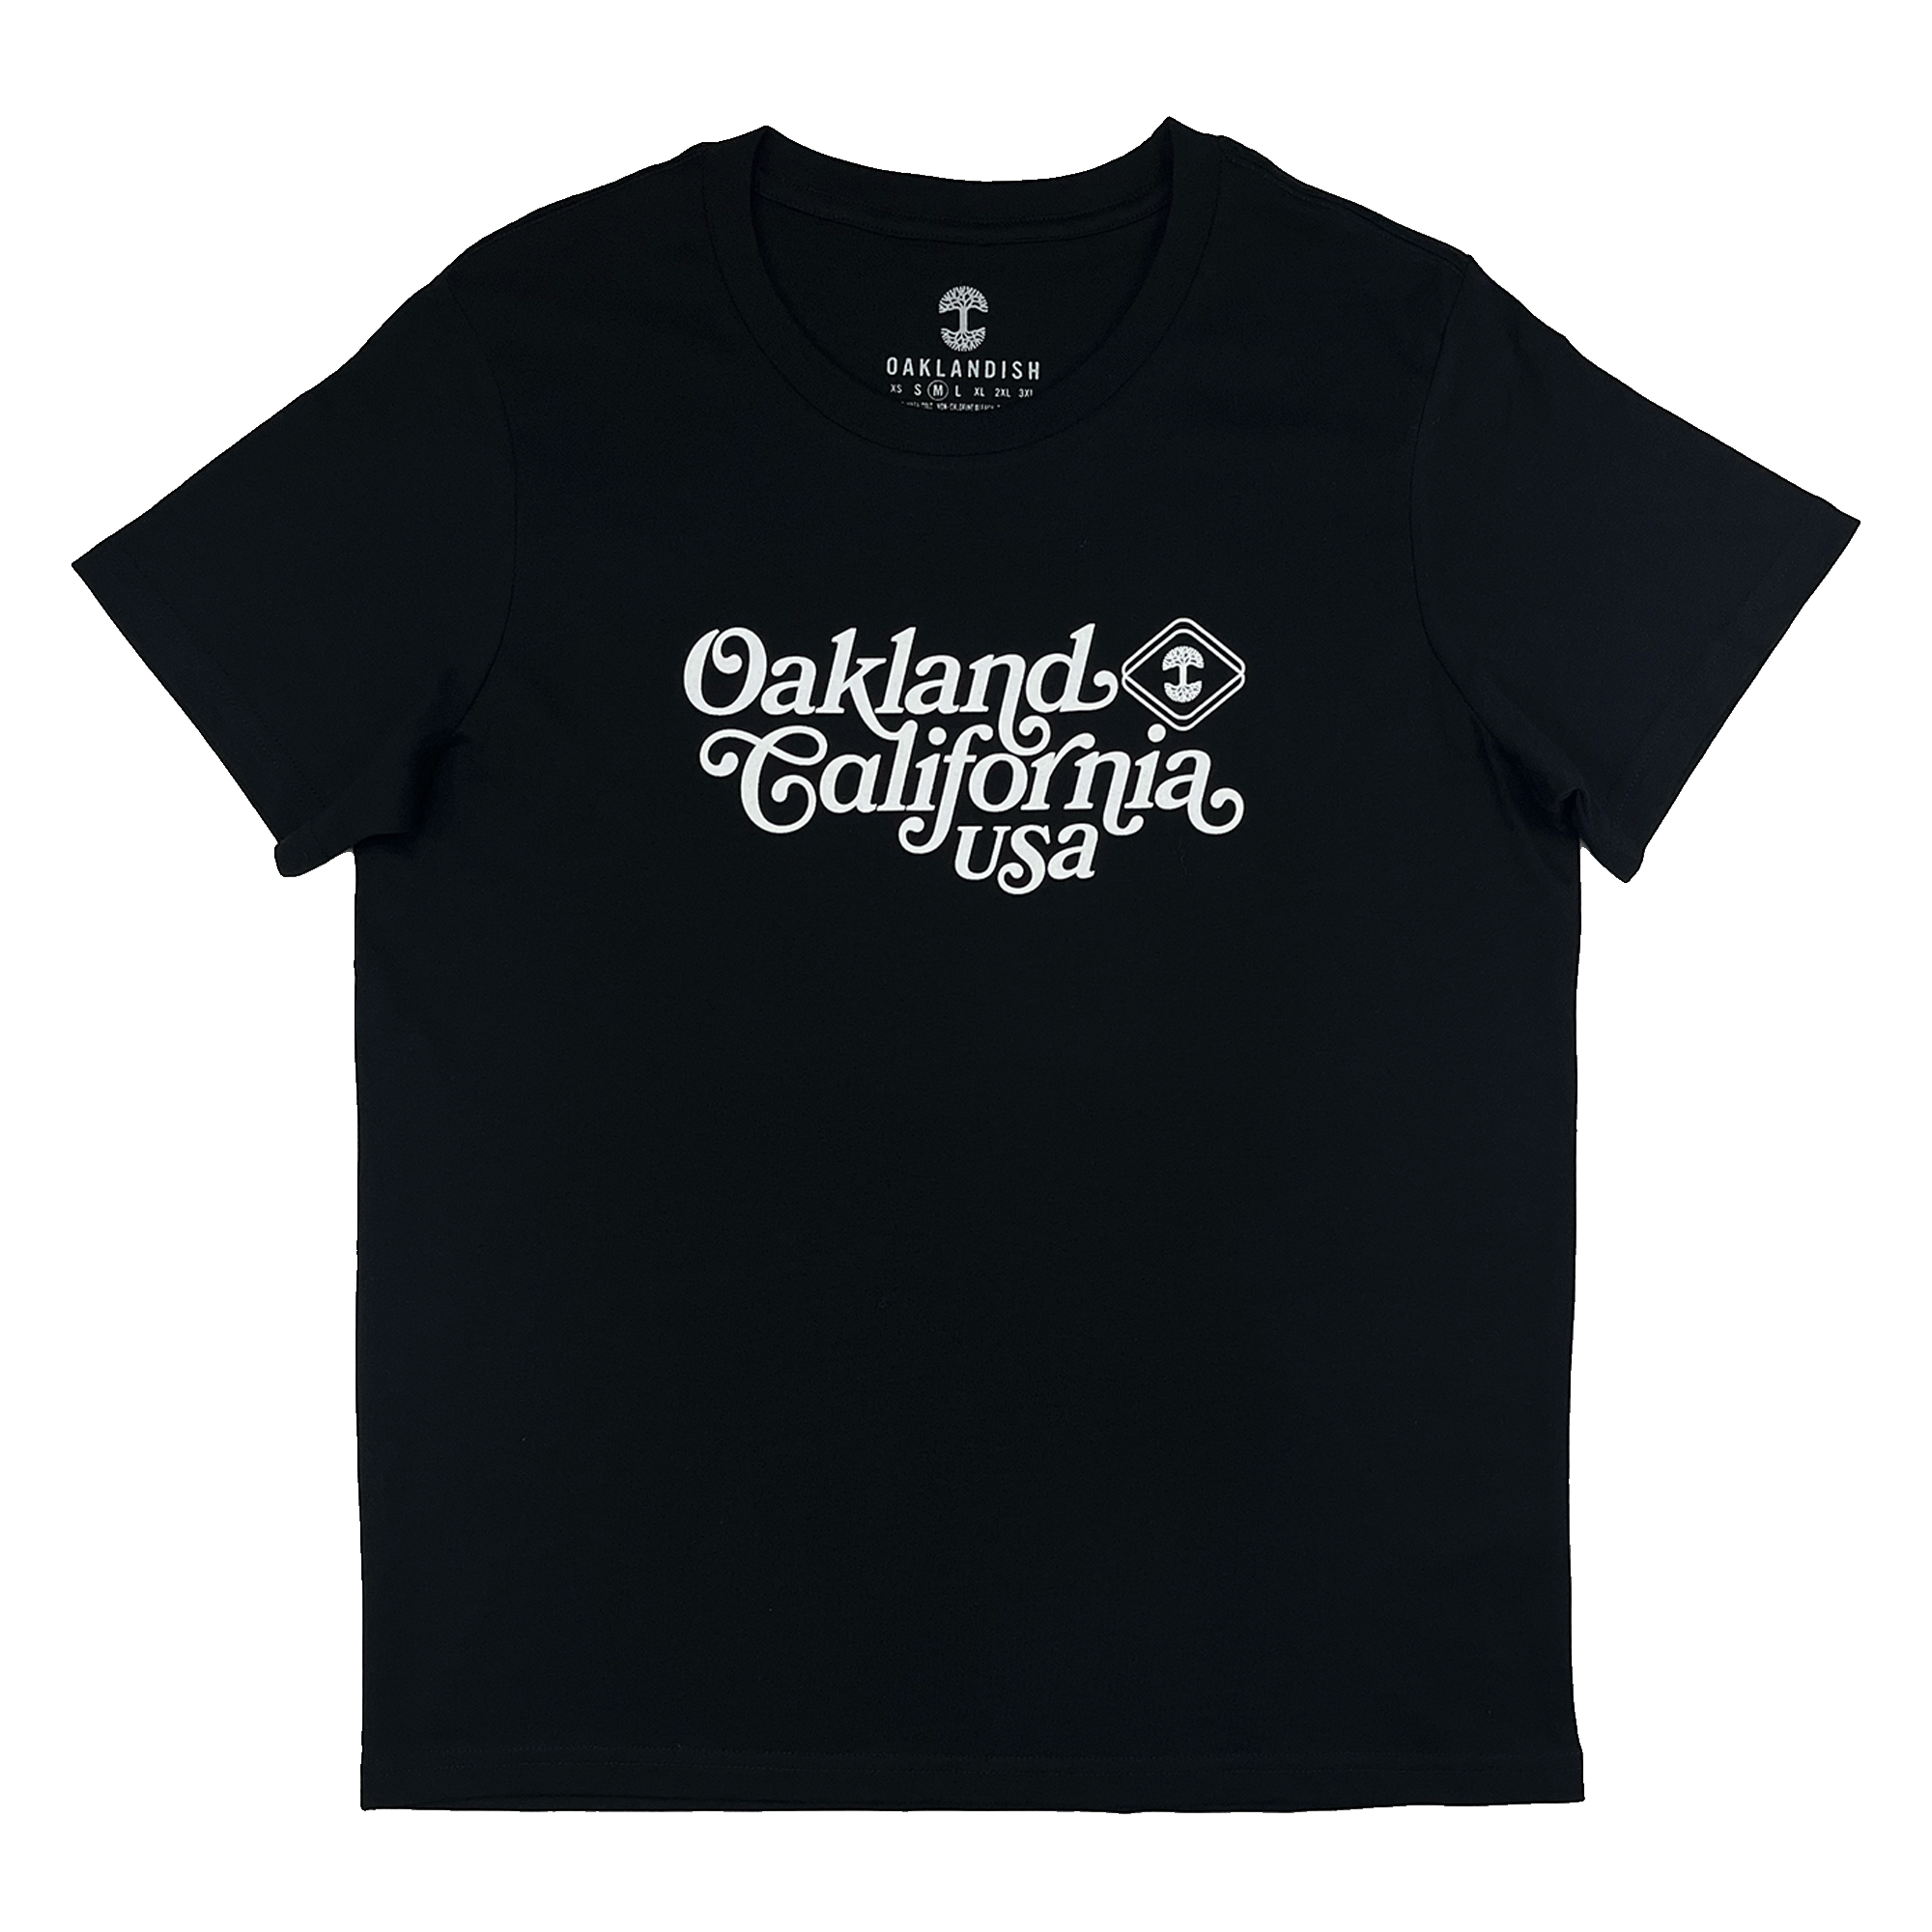 Women’s T-Shirt - Bookman Vintage, Oakland, California USA, Black